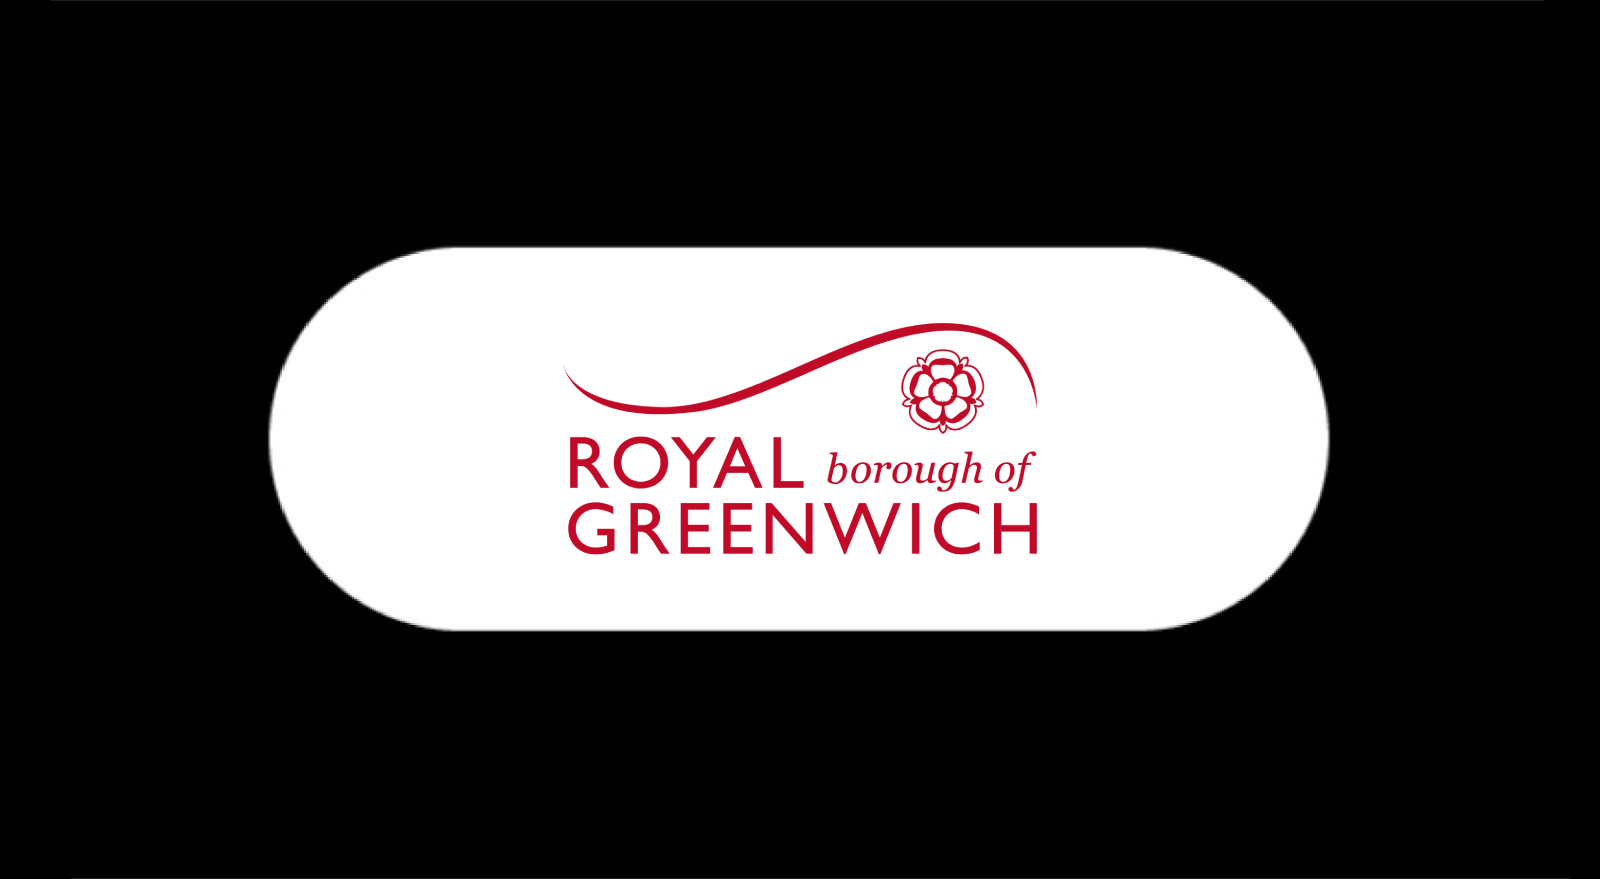 Royal Borough of Greenwich Logo